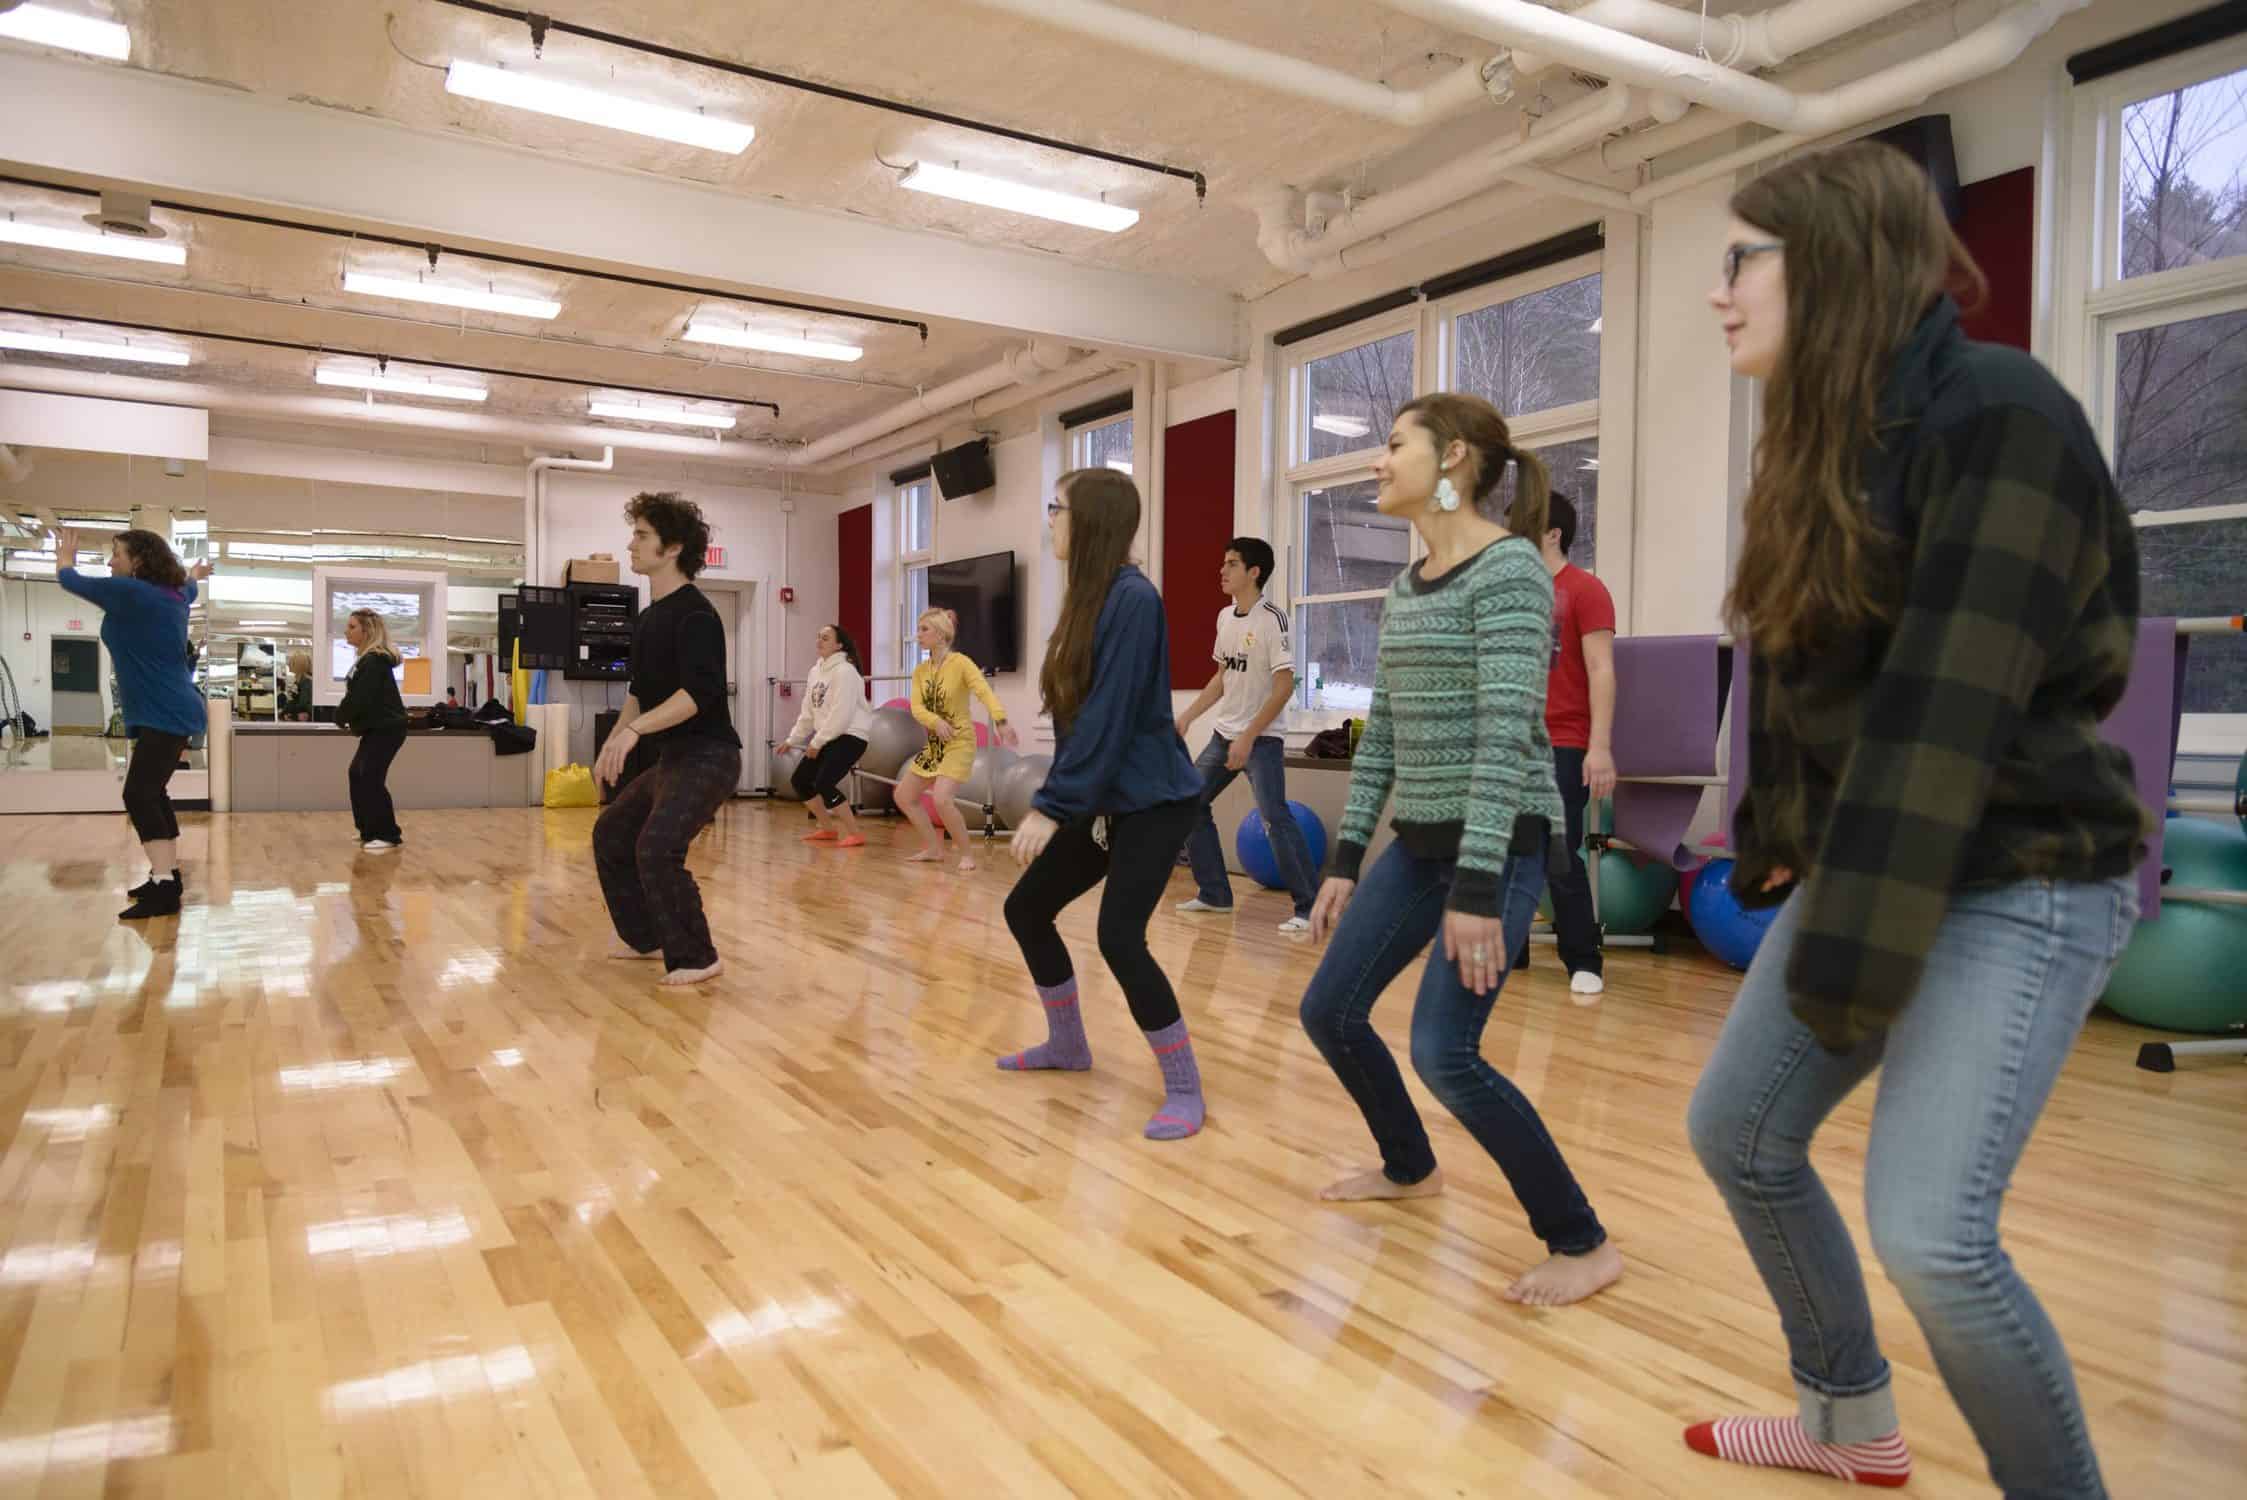 Students dance in the dance studio